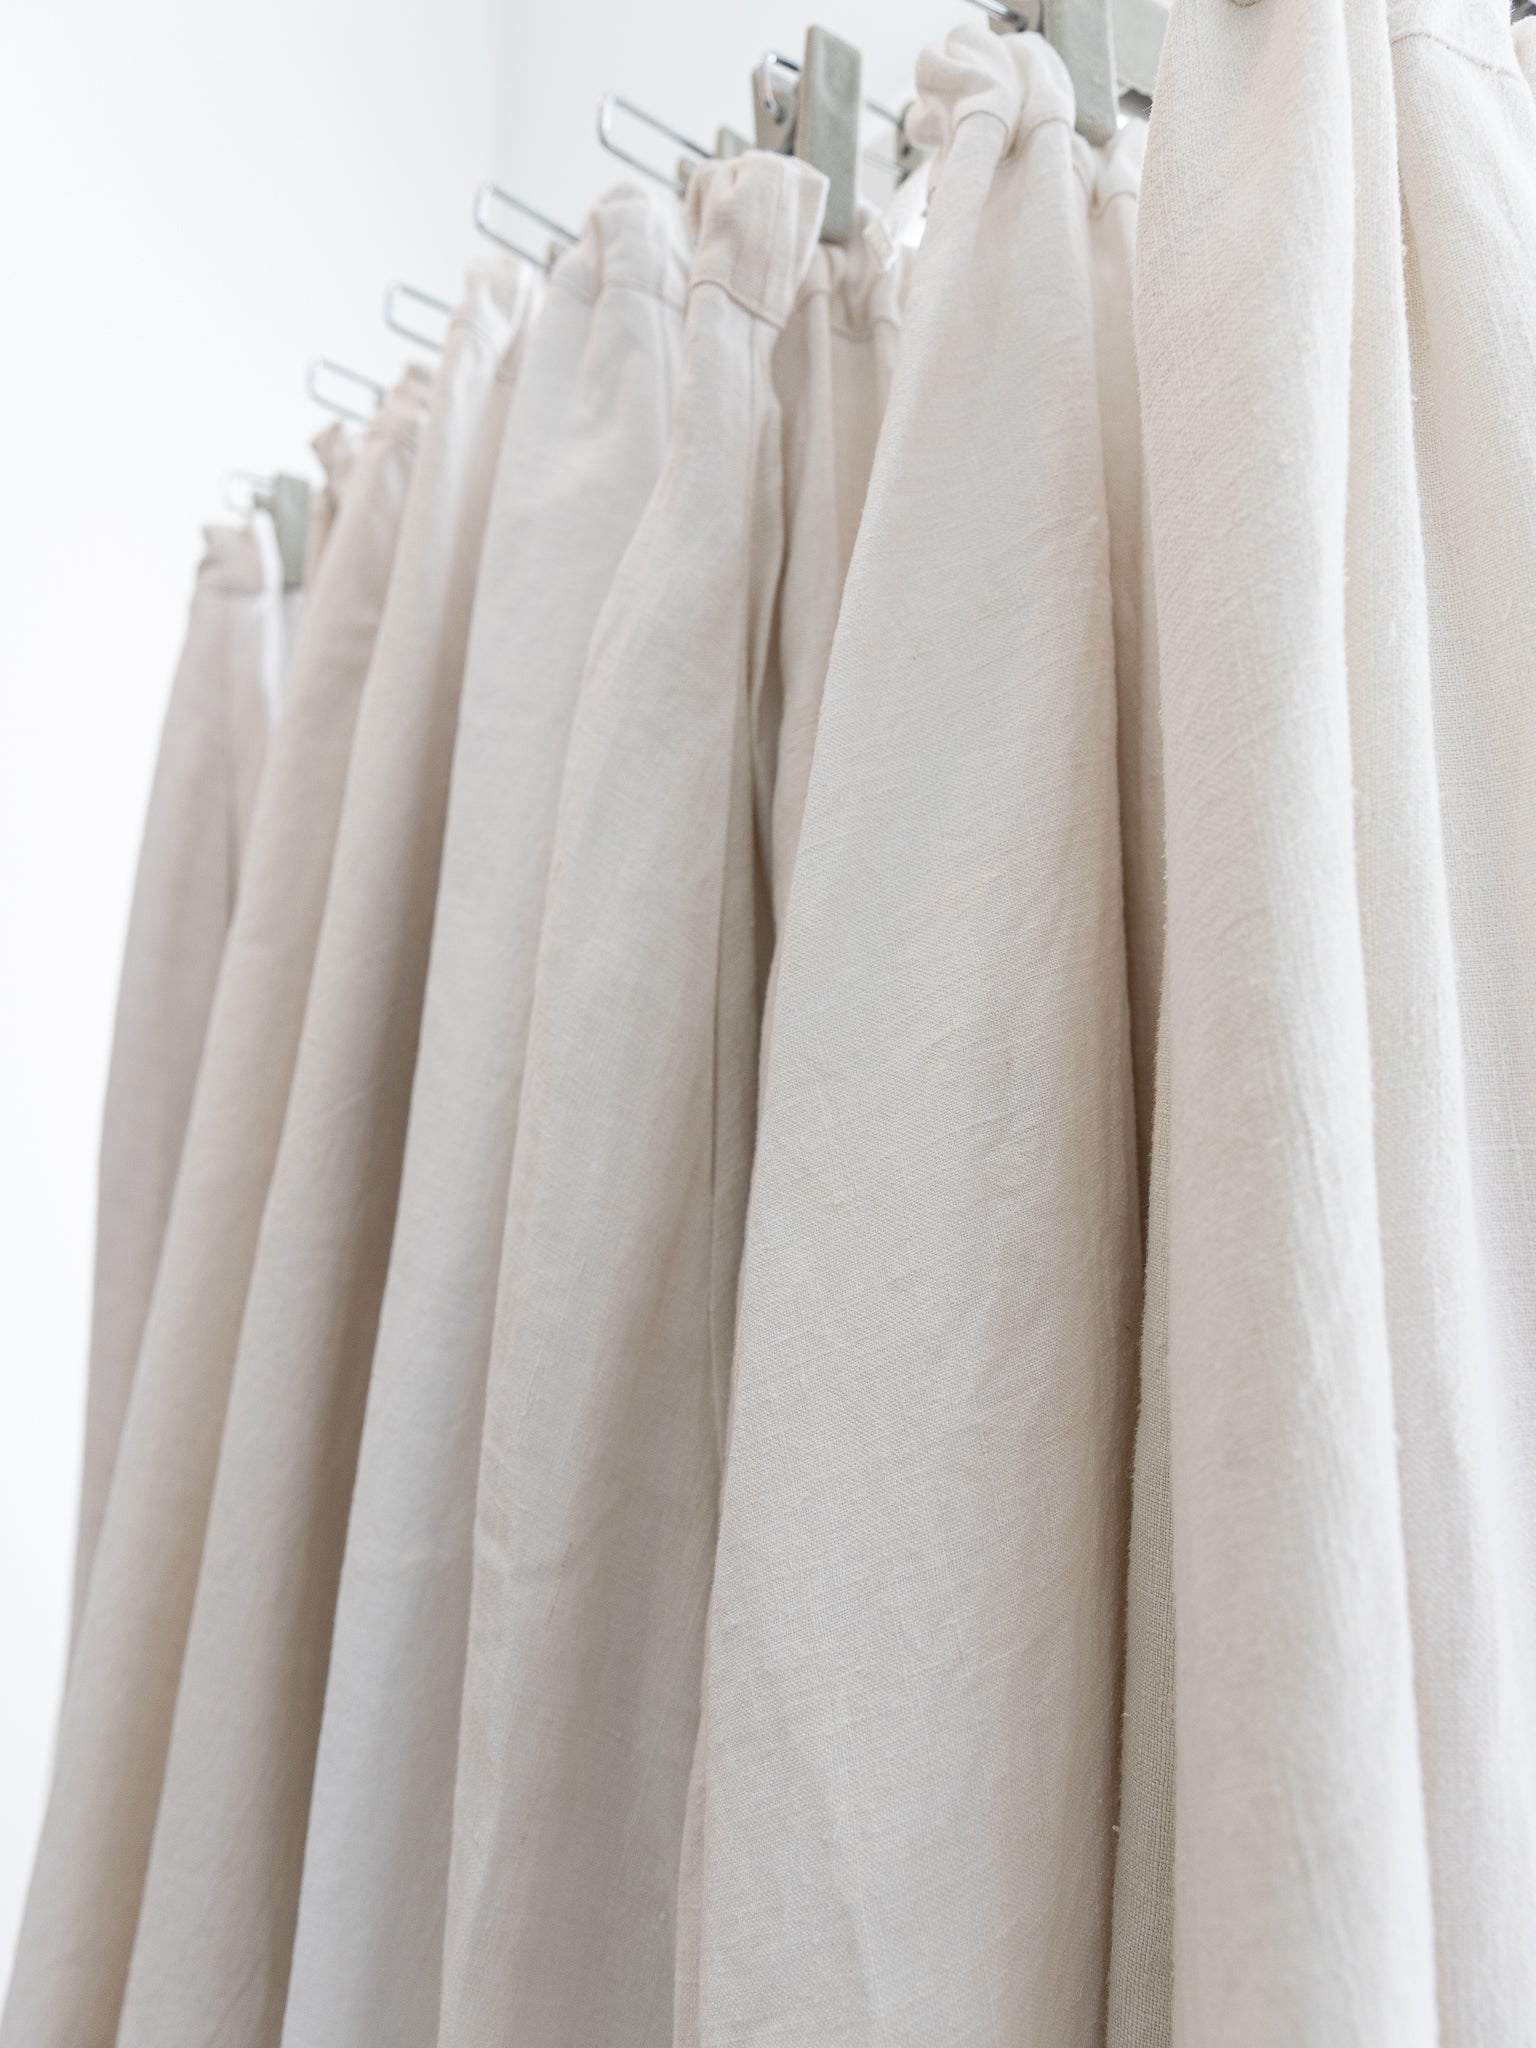 Whiteread Skirt 02, Natural - Worthwhile